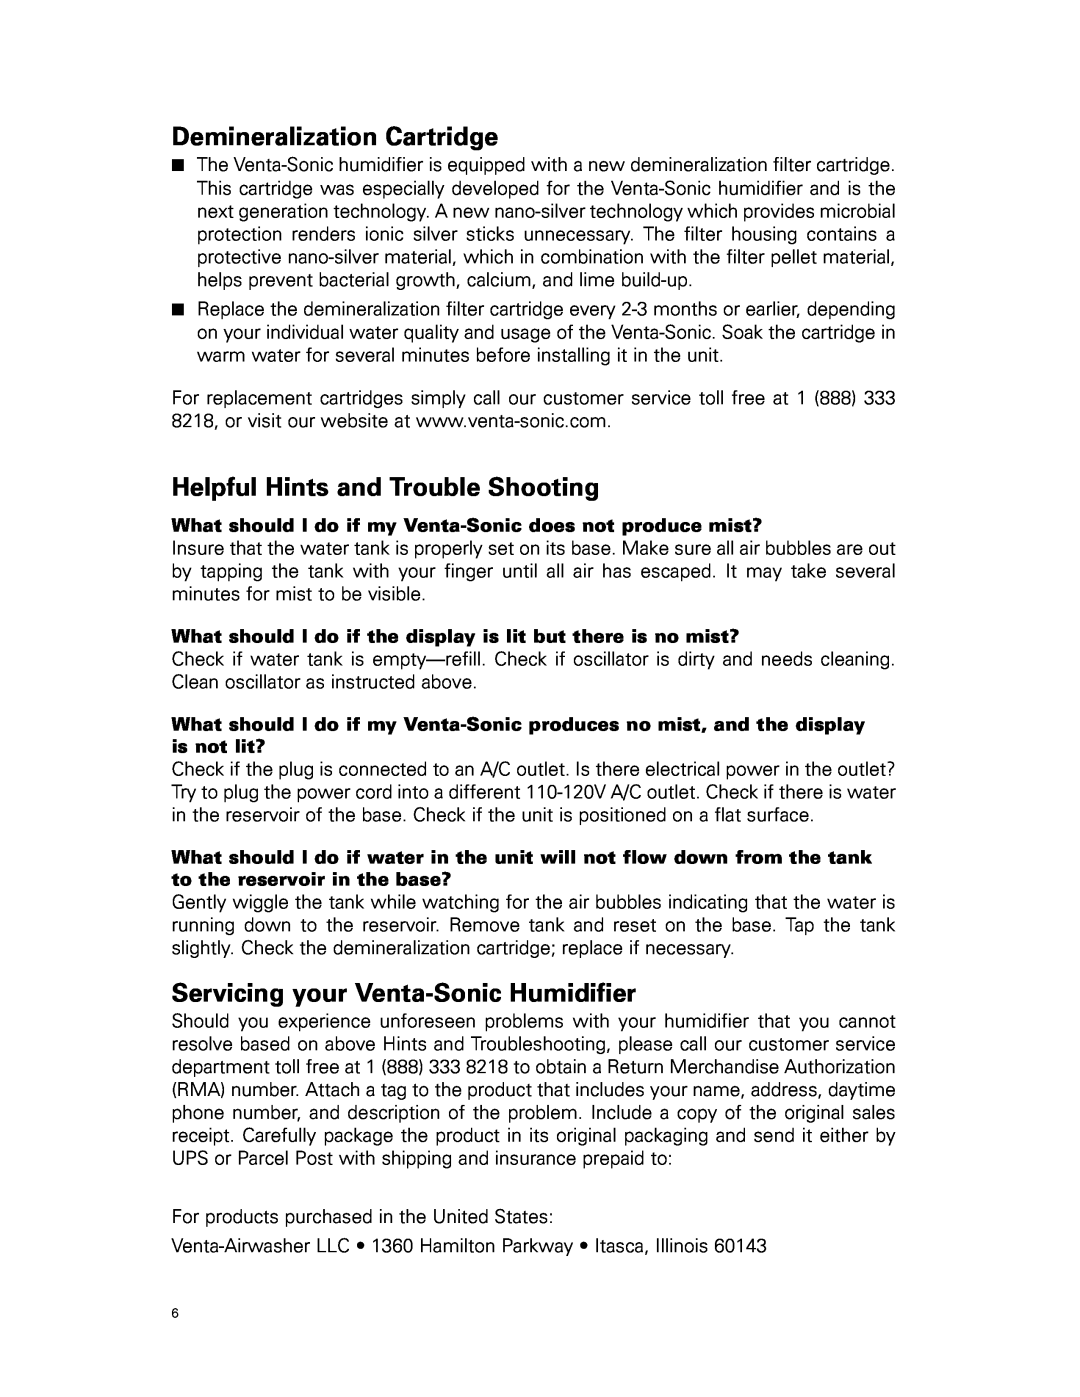 Venta Airwasher VS 207 user manual Demineralization Cartridge, Helpful Hints and Trouble Shooting 